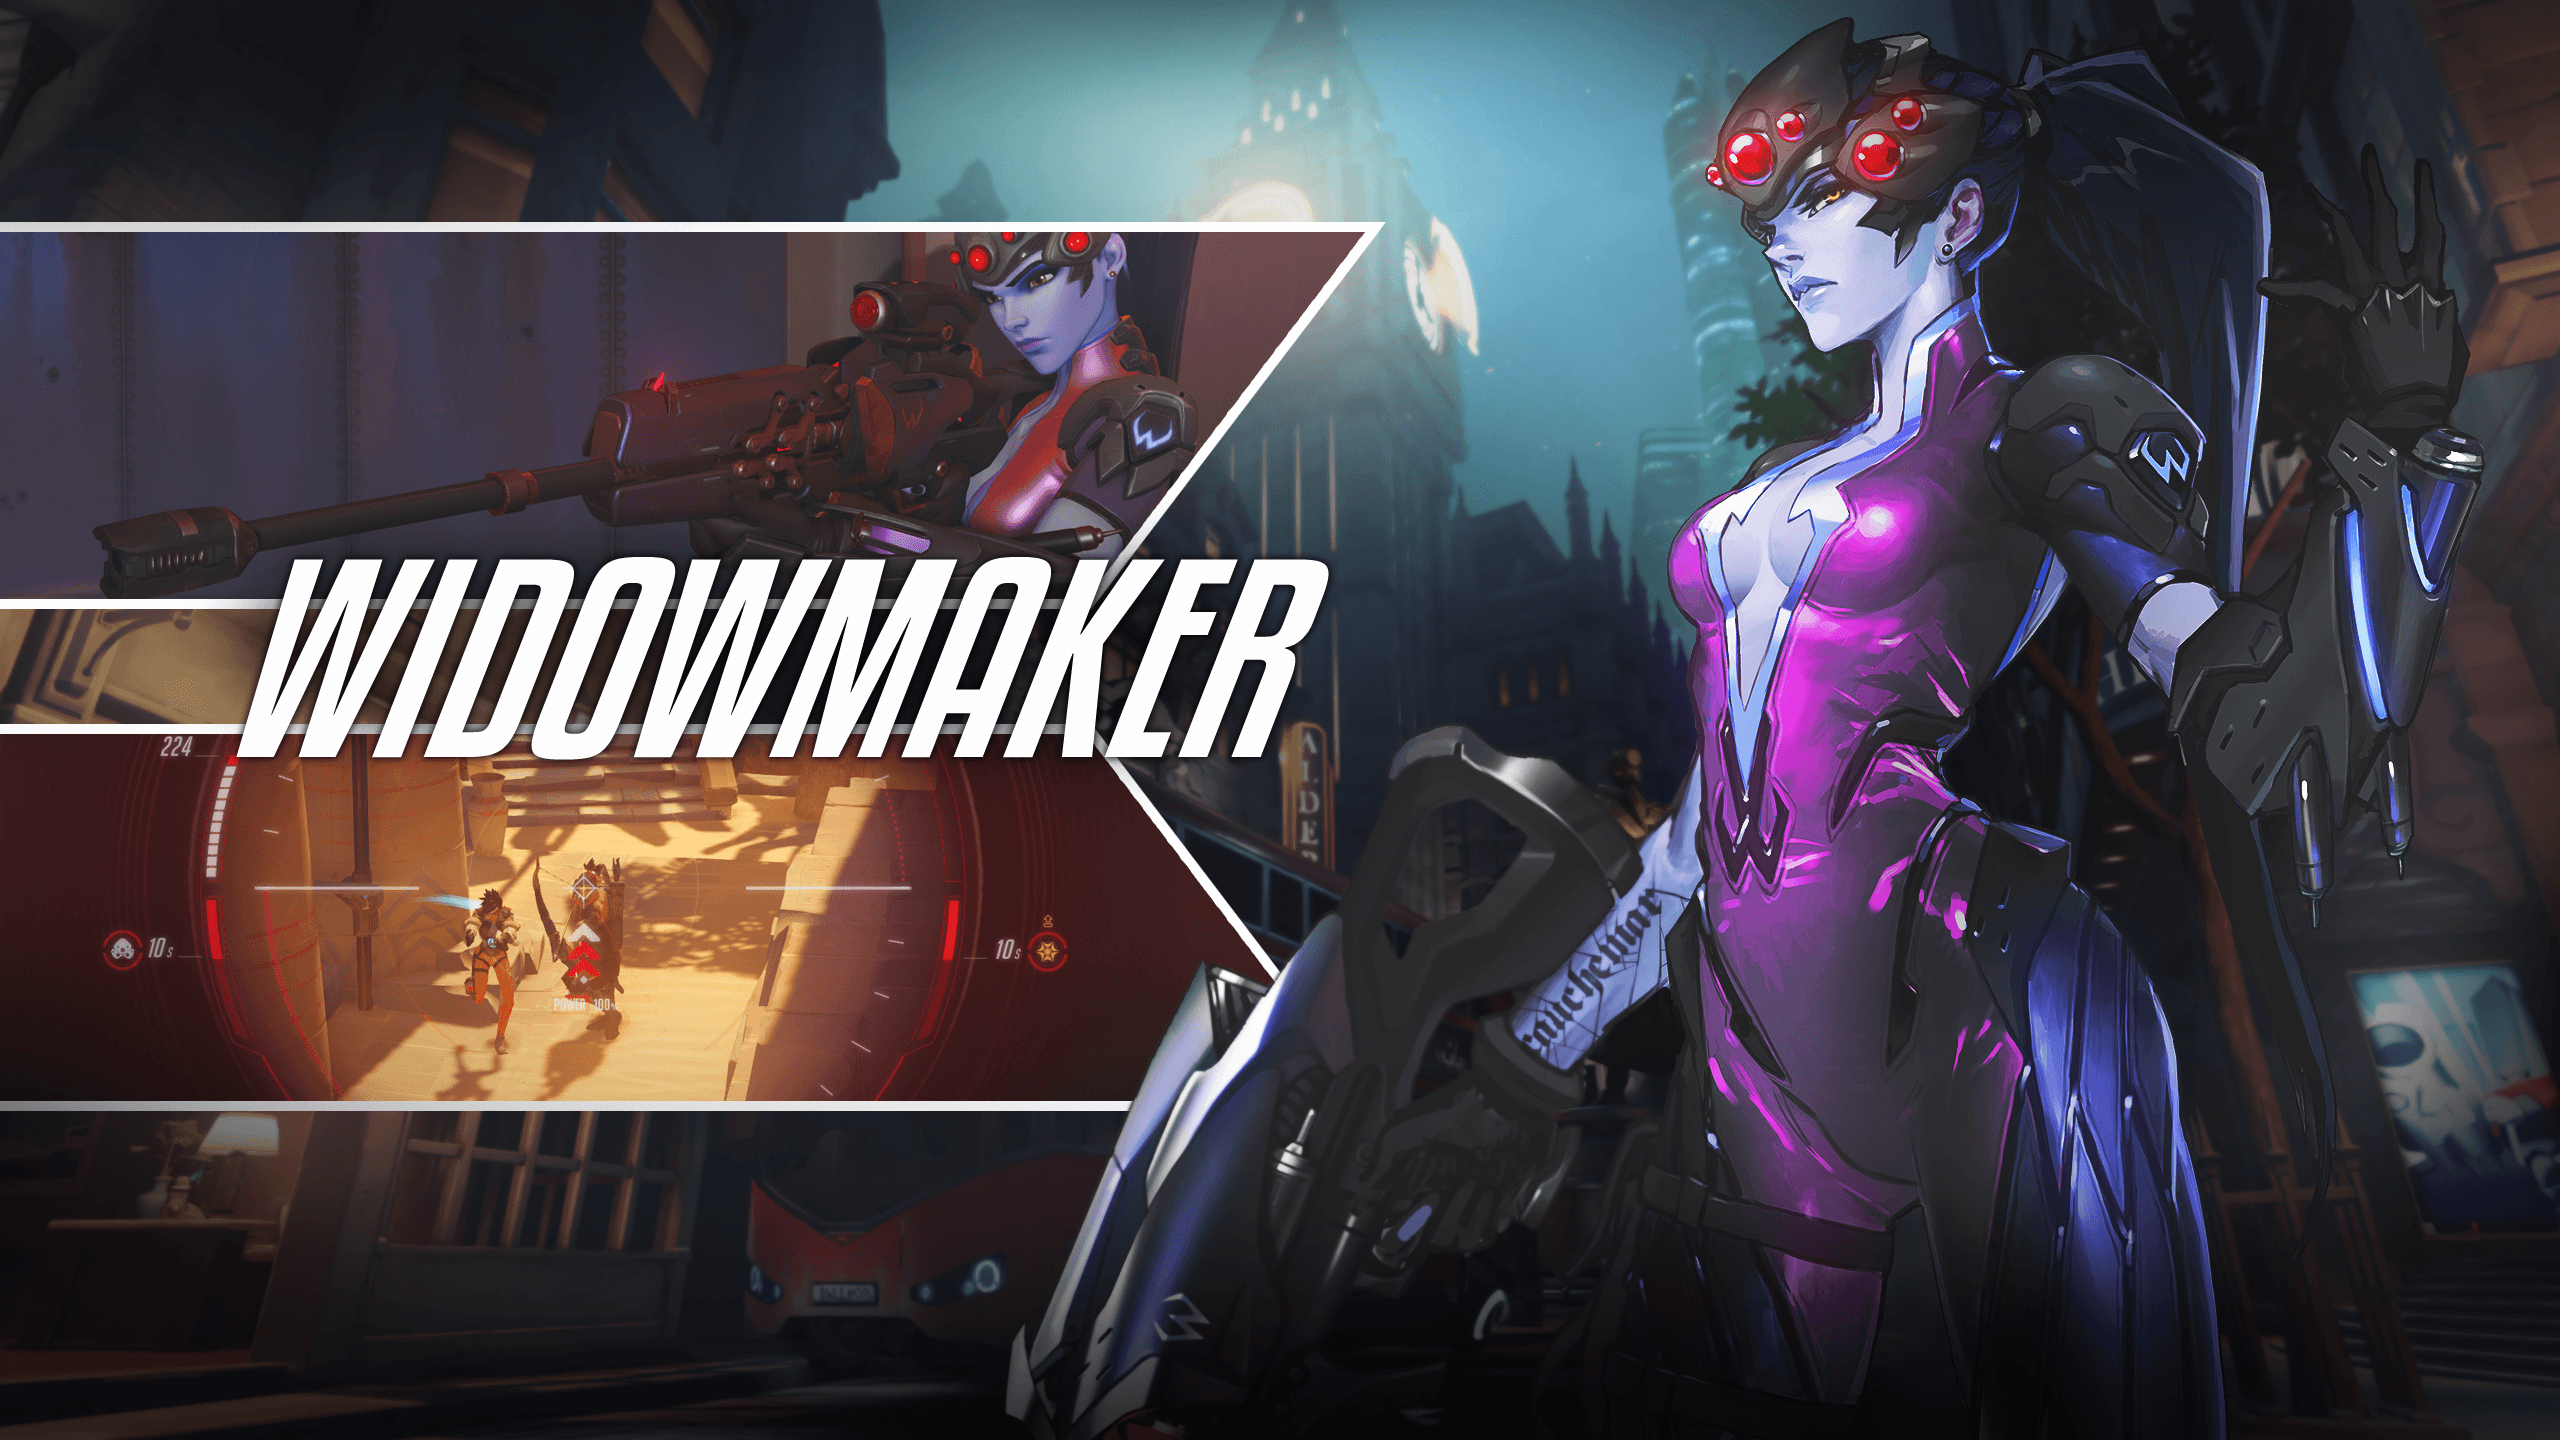 Widowmaker (Overwatch) HD Wallpaper and Background Image